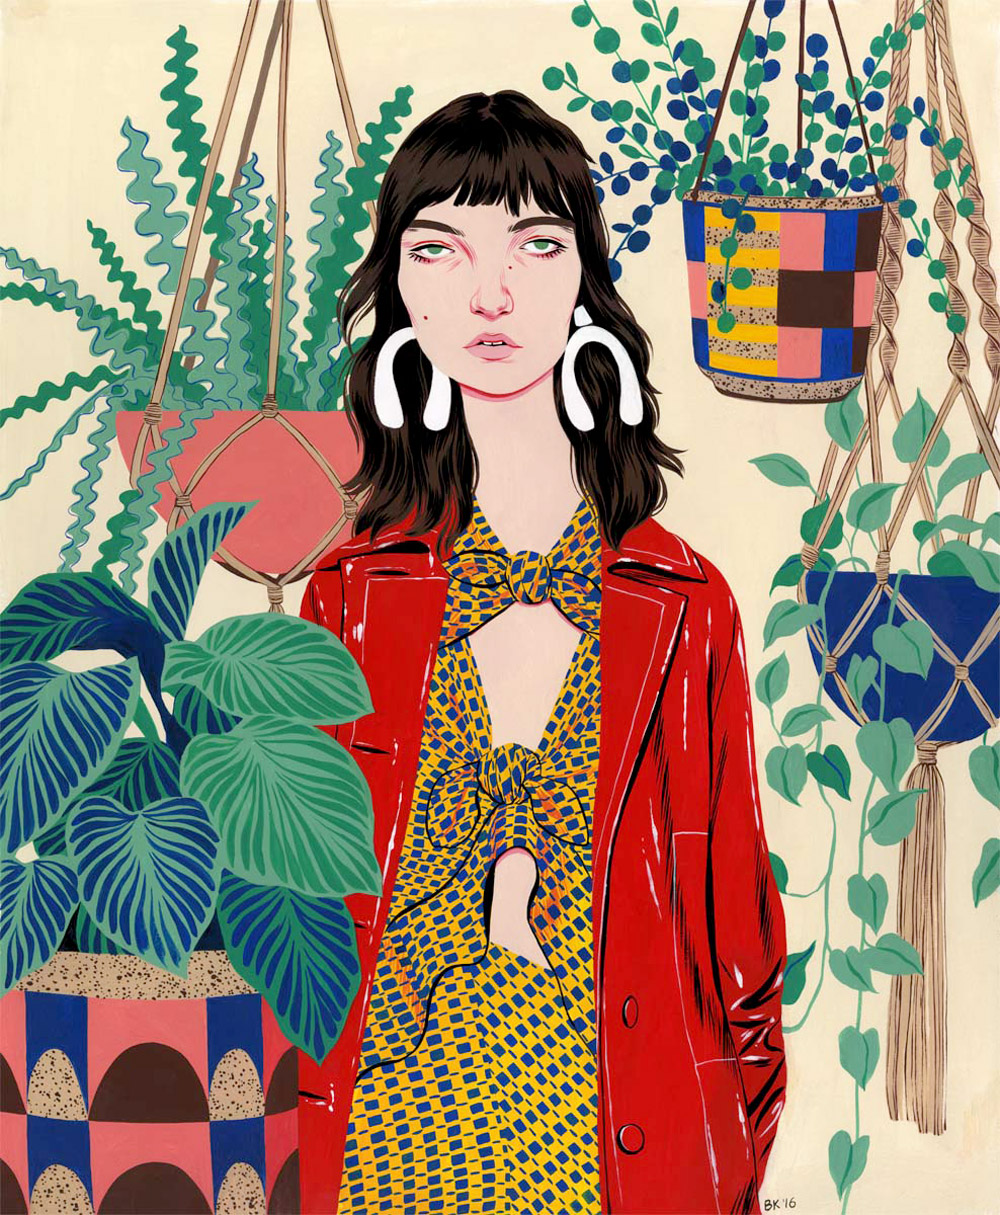 Female Portraits Painted by Illustrator Bijou Karman